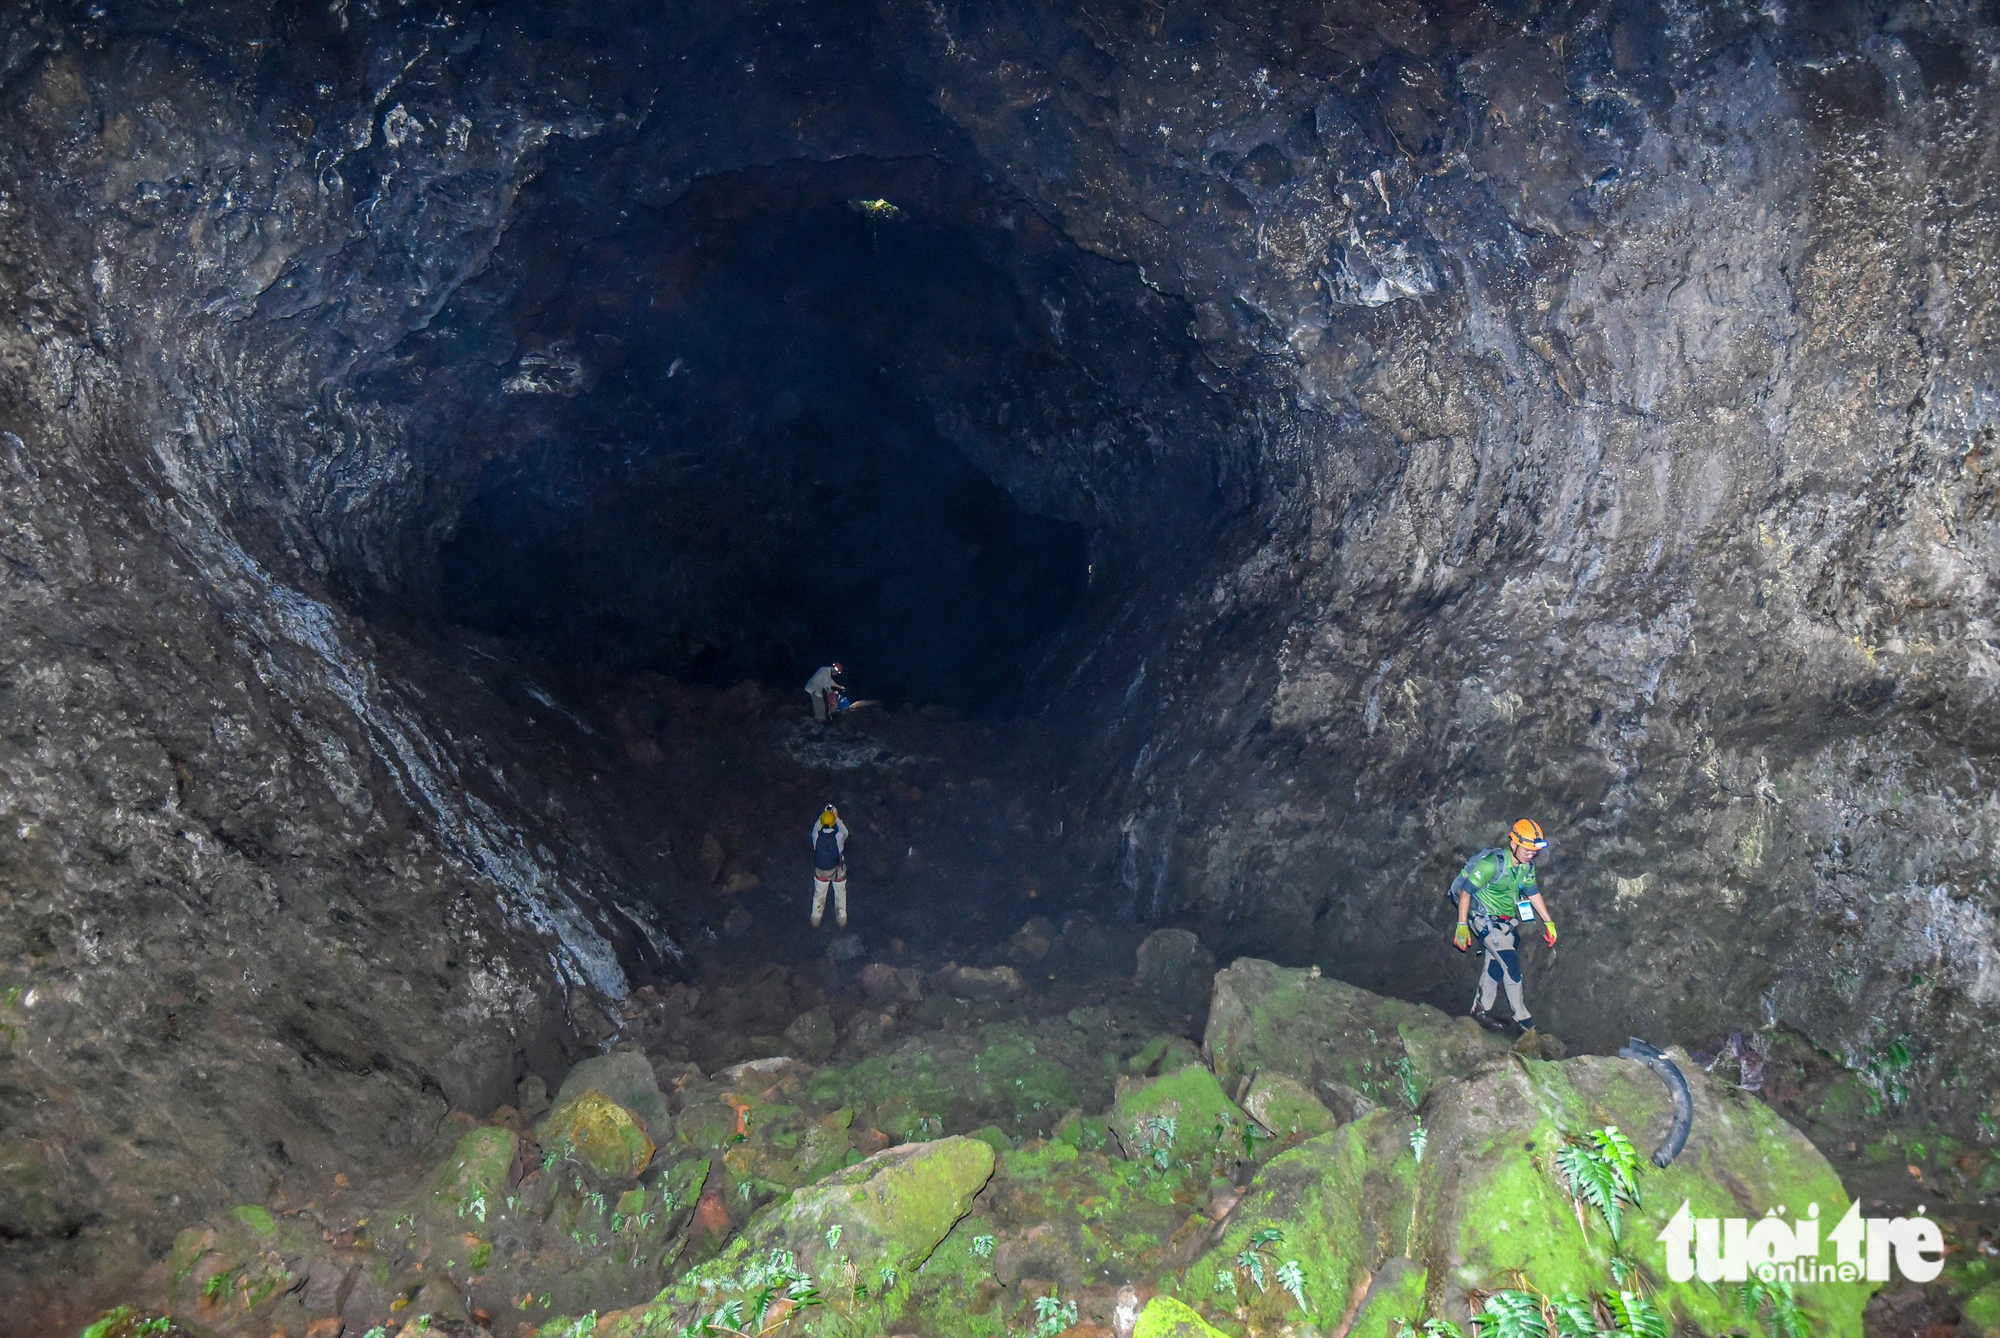 Cavers explore the volcanic cavern system in Dak Nong Province in Vietnam’s Central Highlands region. Photo: Tuoi Tre